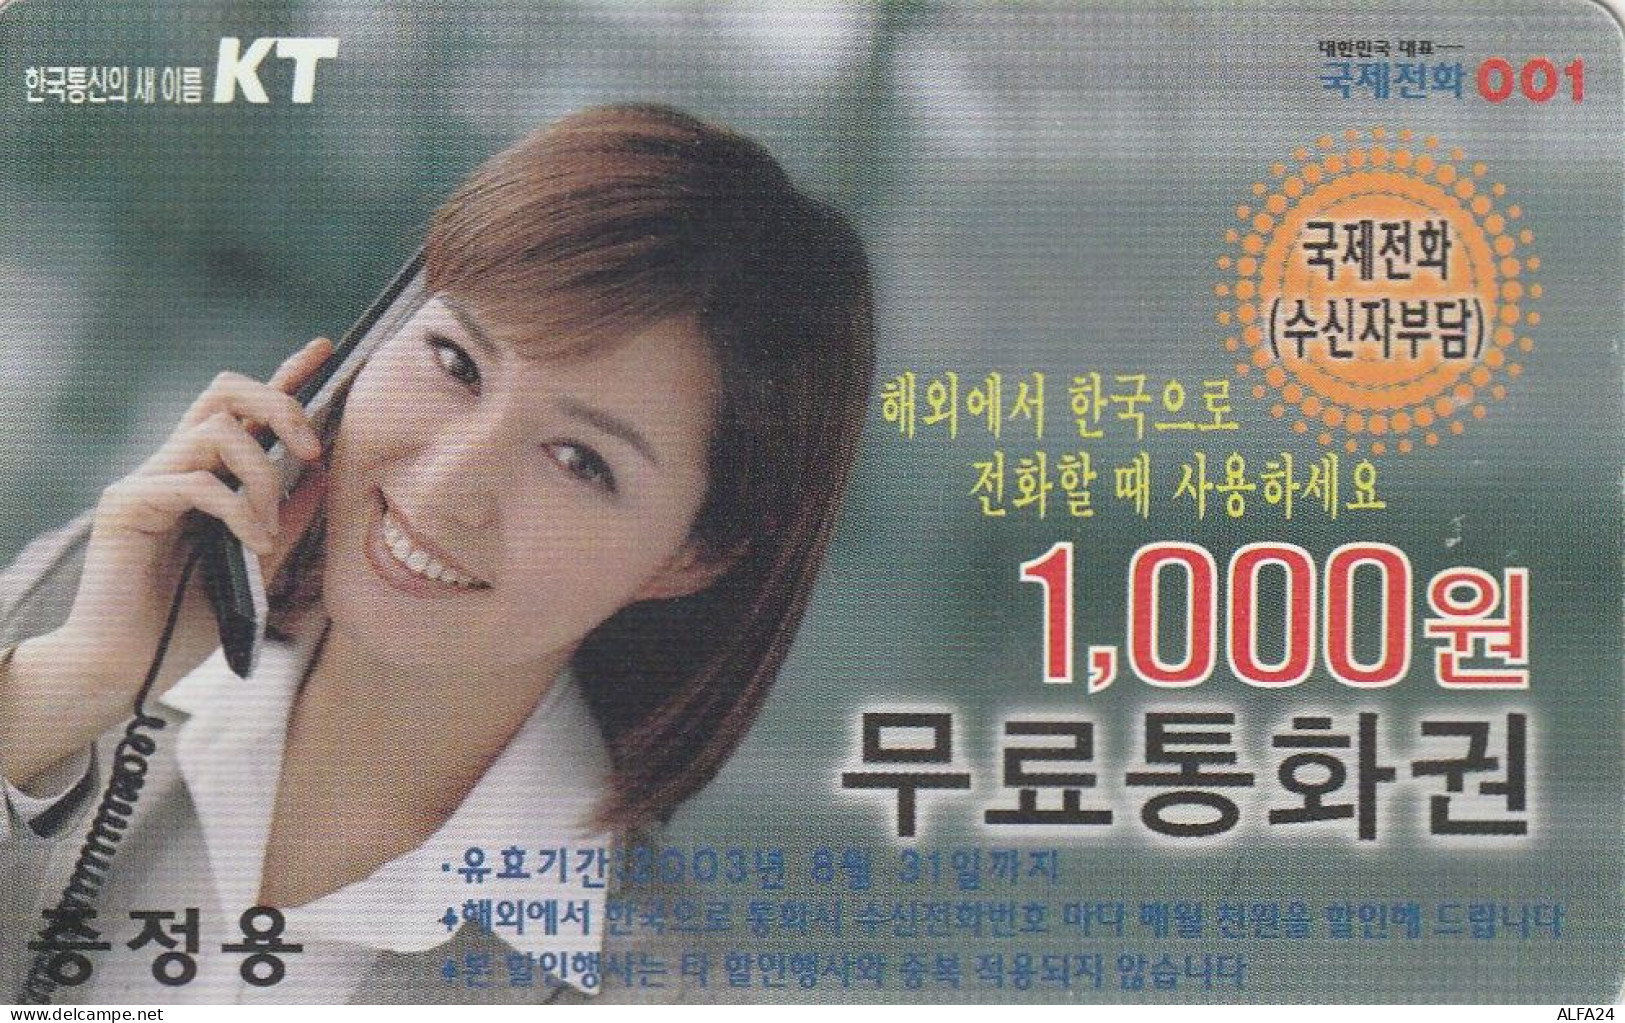 PREPAID PHONE CARD COREA SUD  (CV3707 - Corée Du Sud